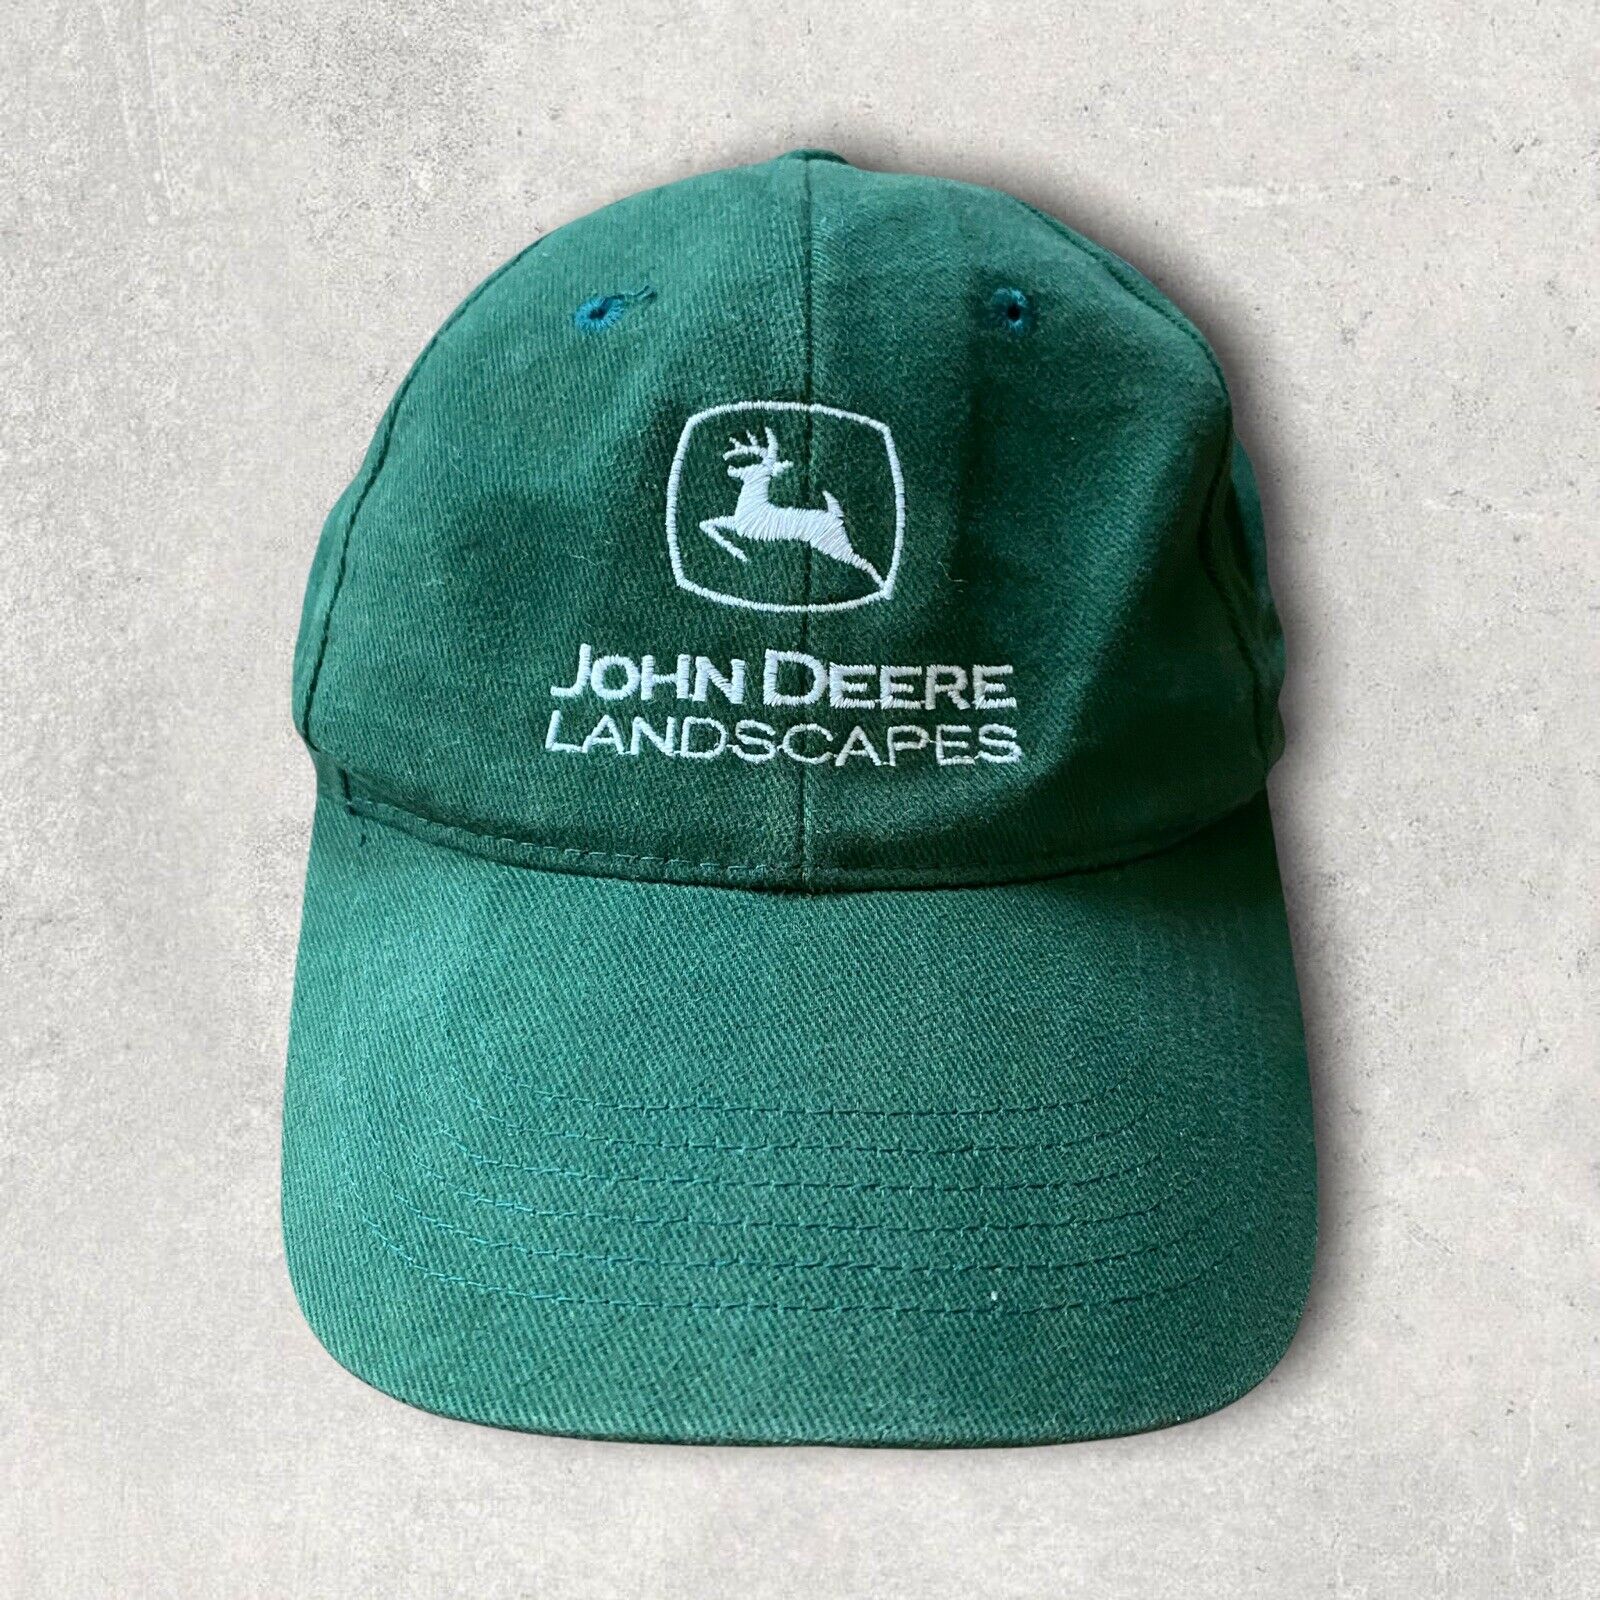 John Deere Landscapes Baseball Cap Hat Green Sportsman Embroidered 100% Cotton